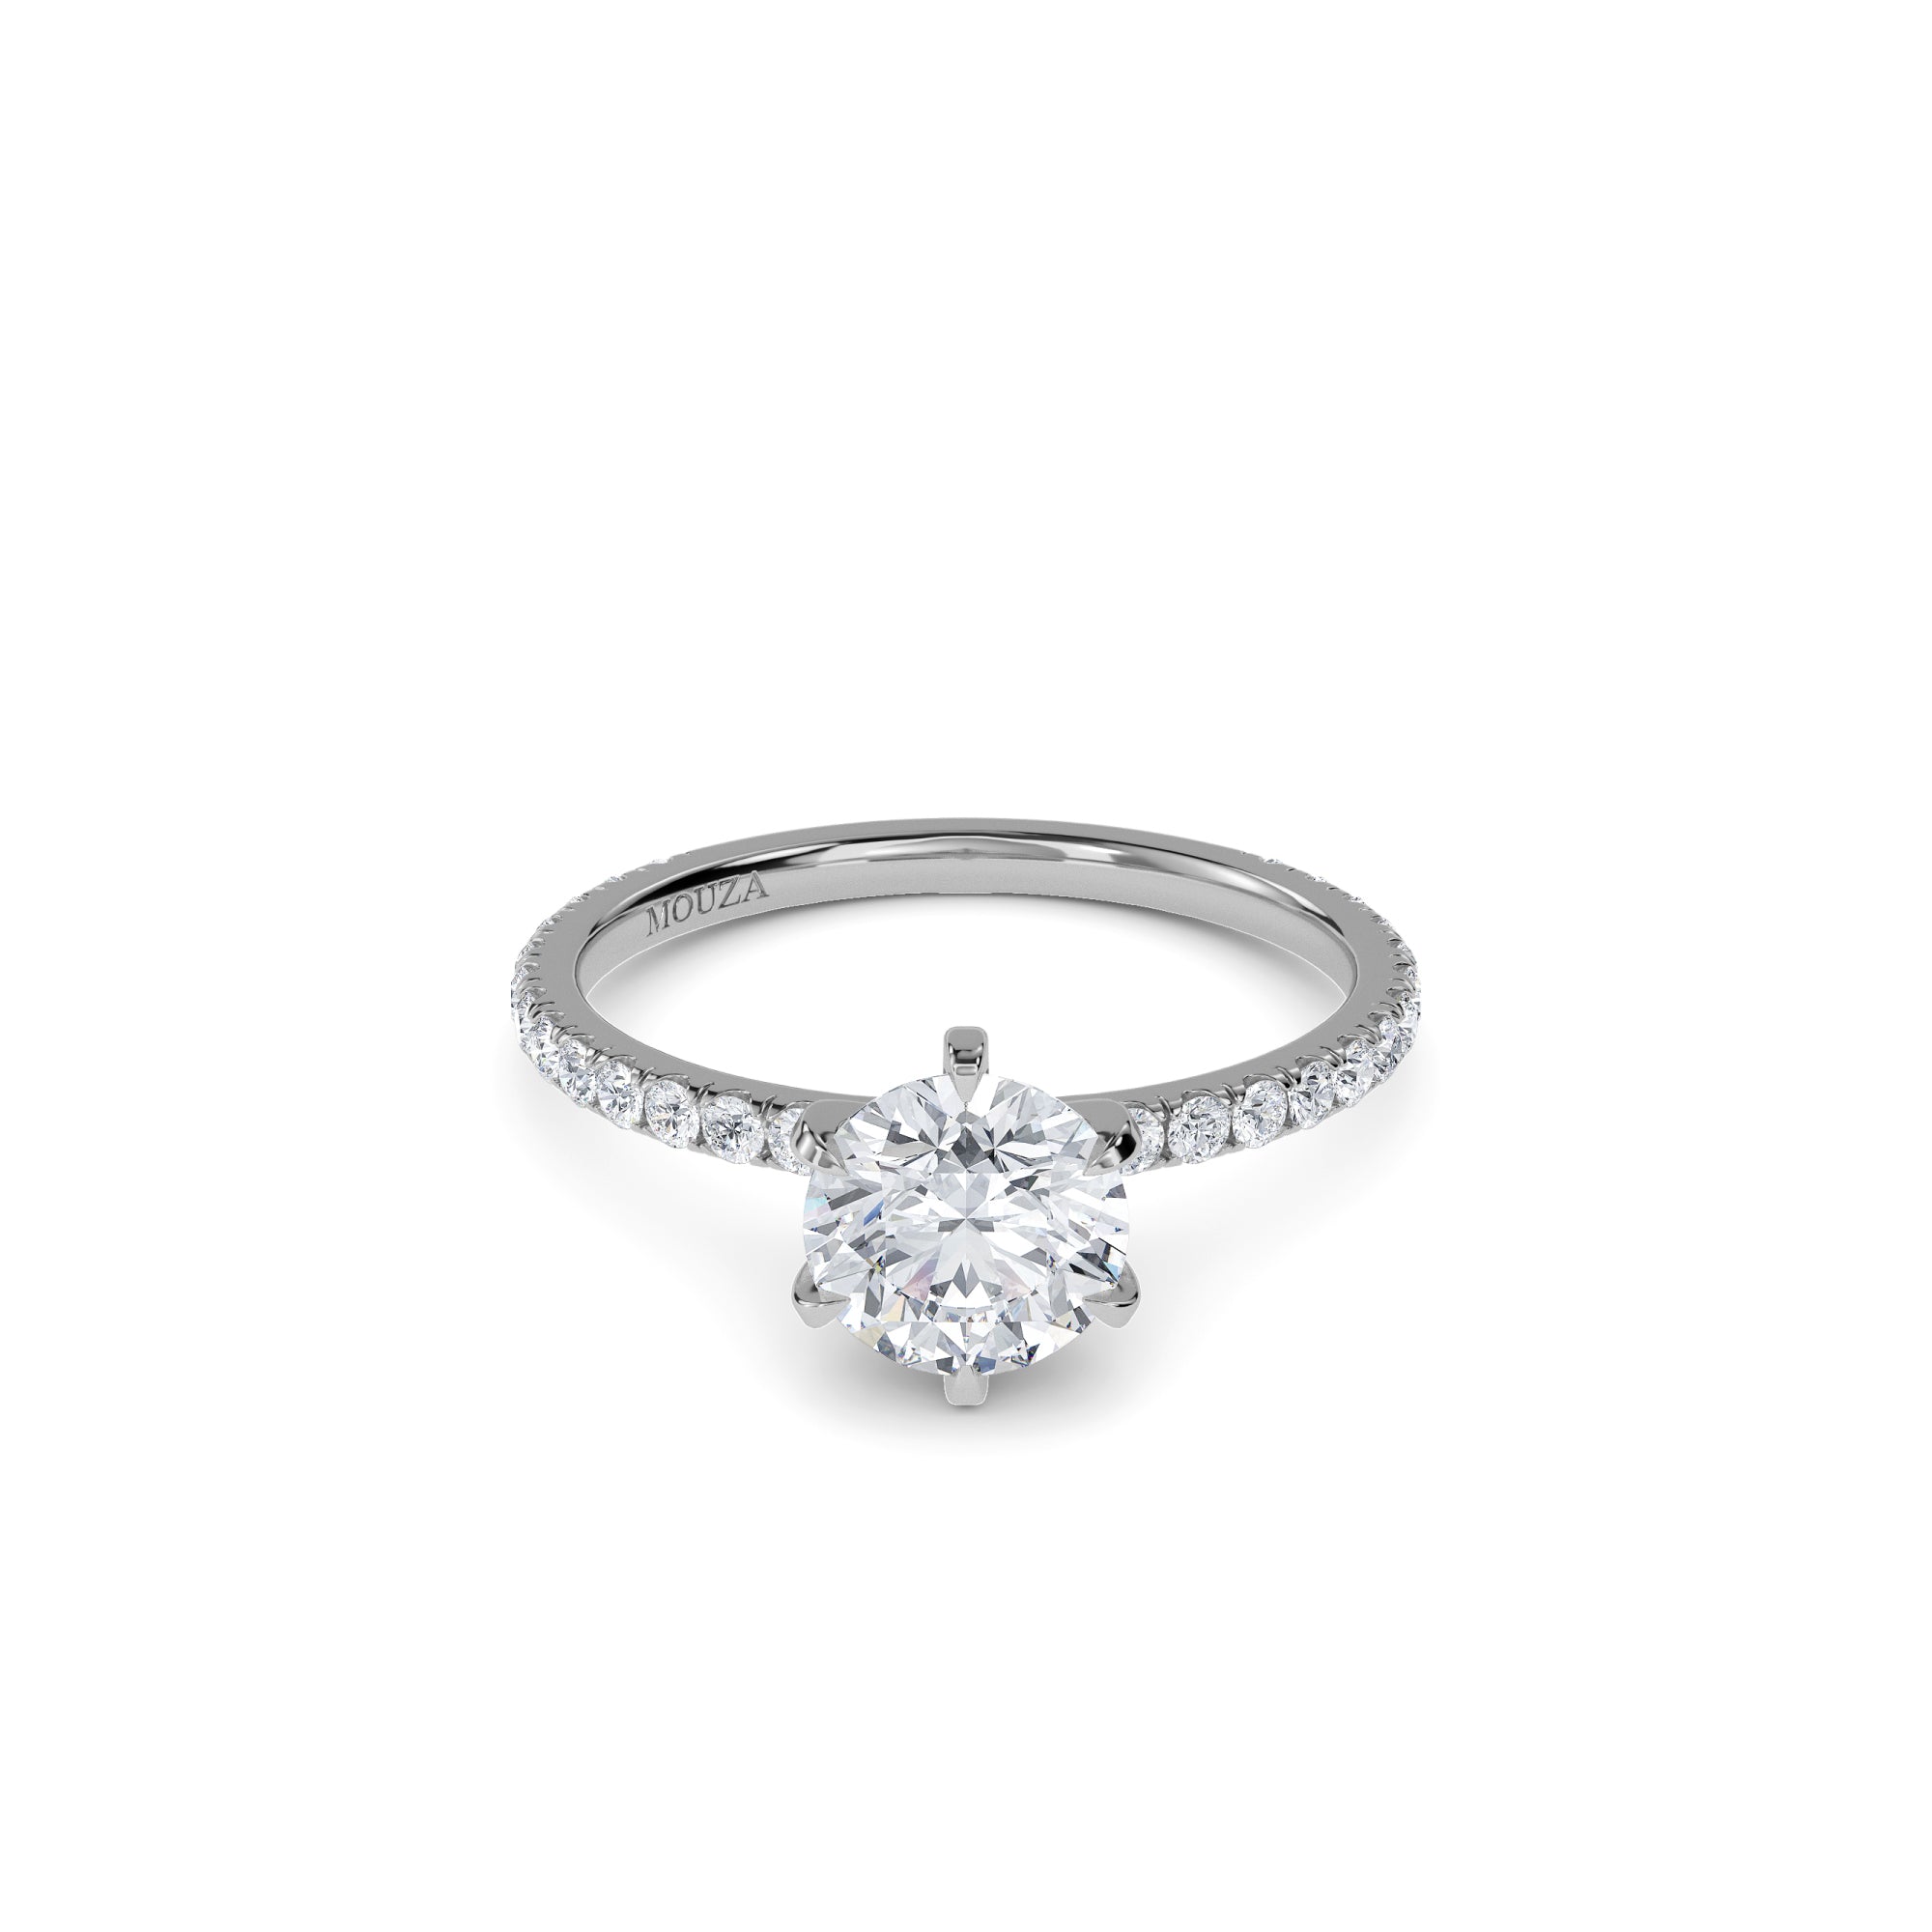 6 claws round diamond engagement ring in platinum